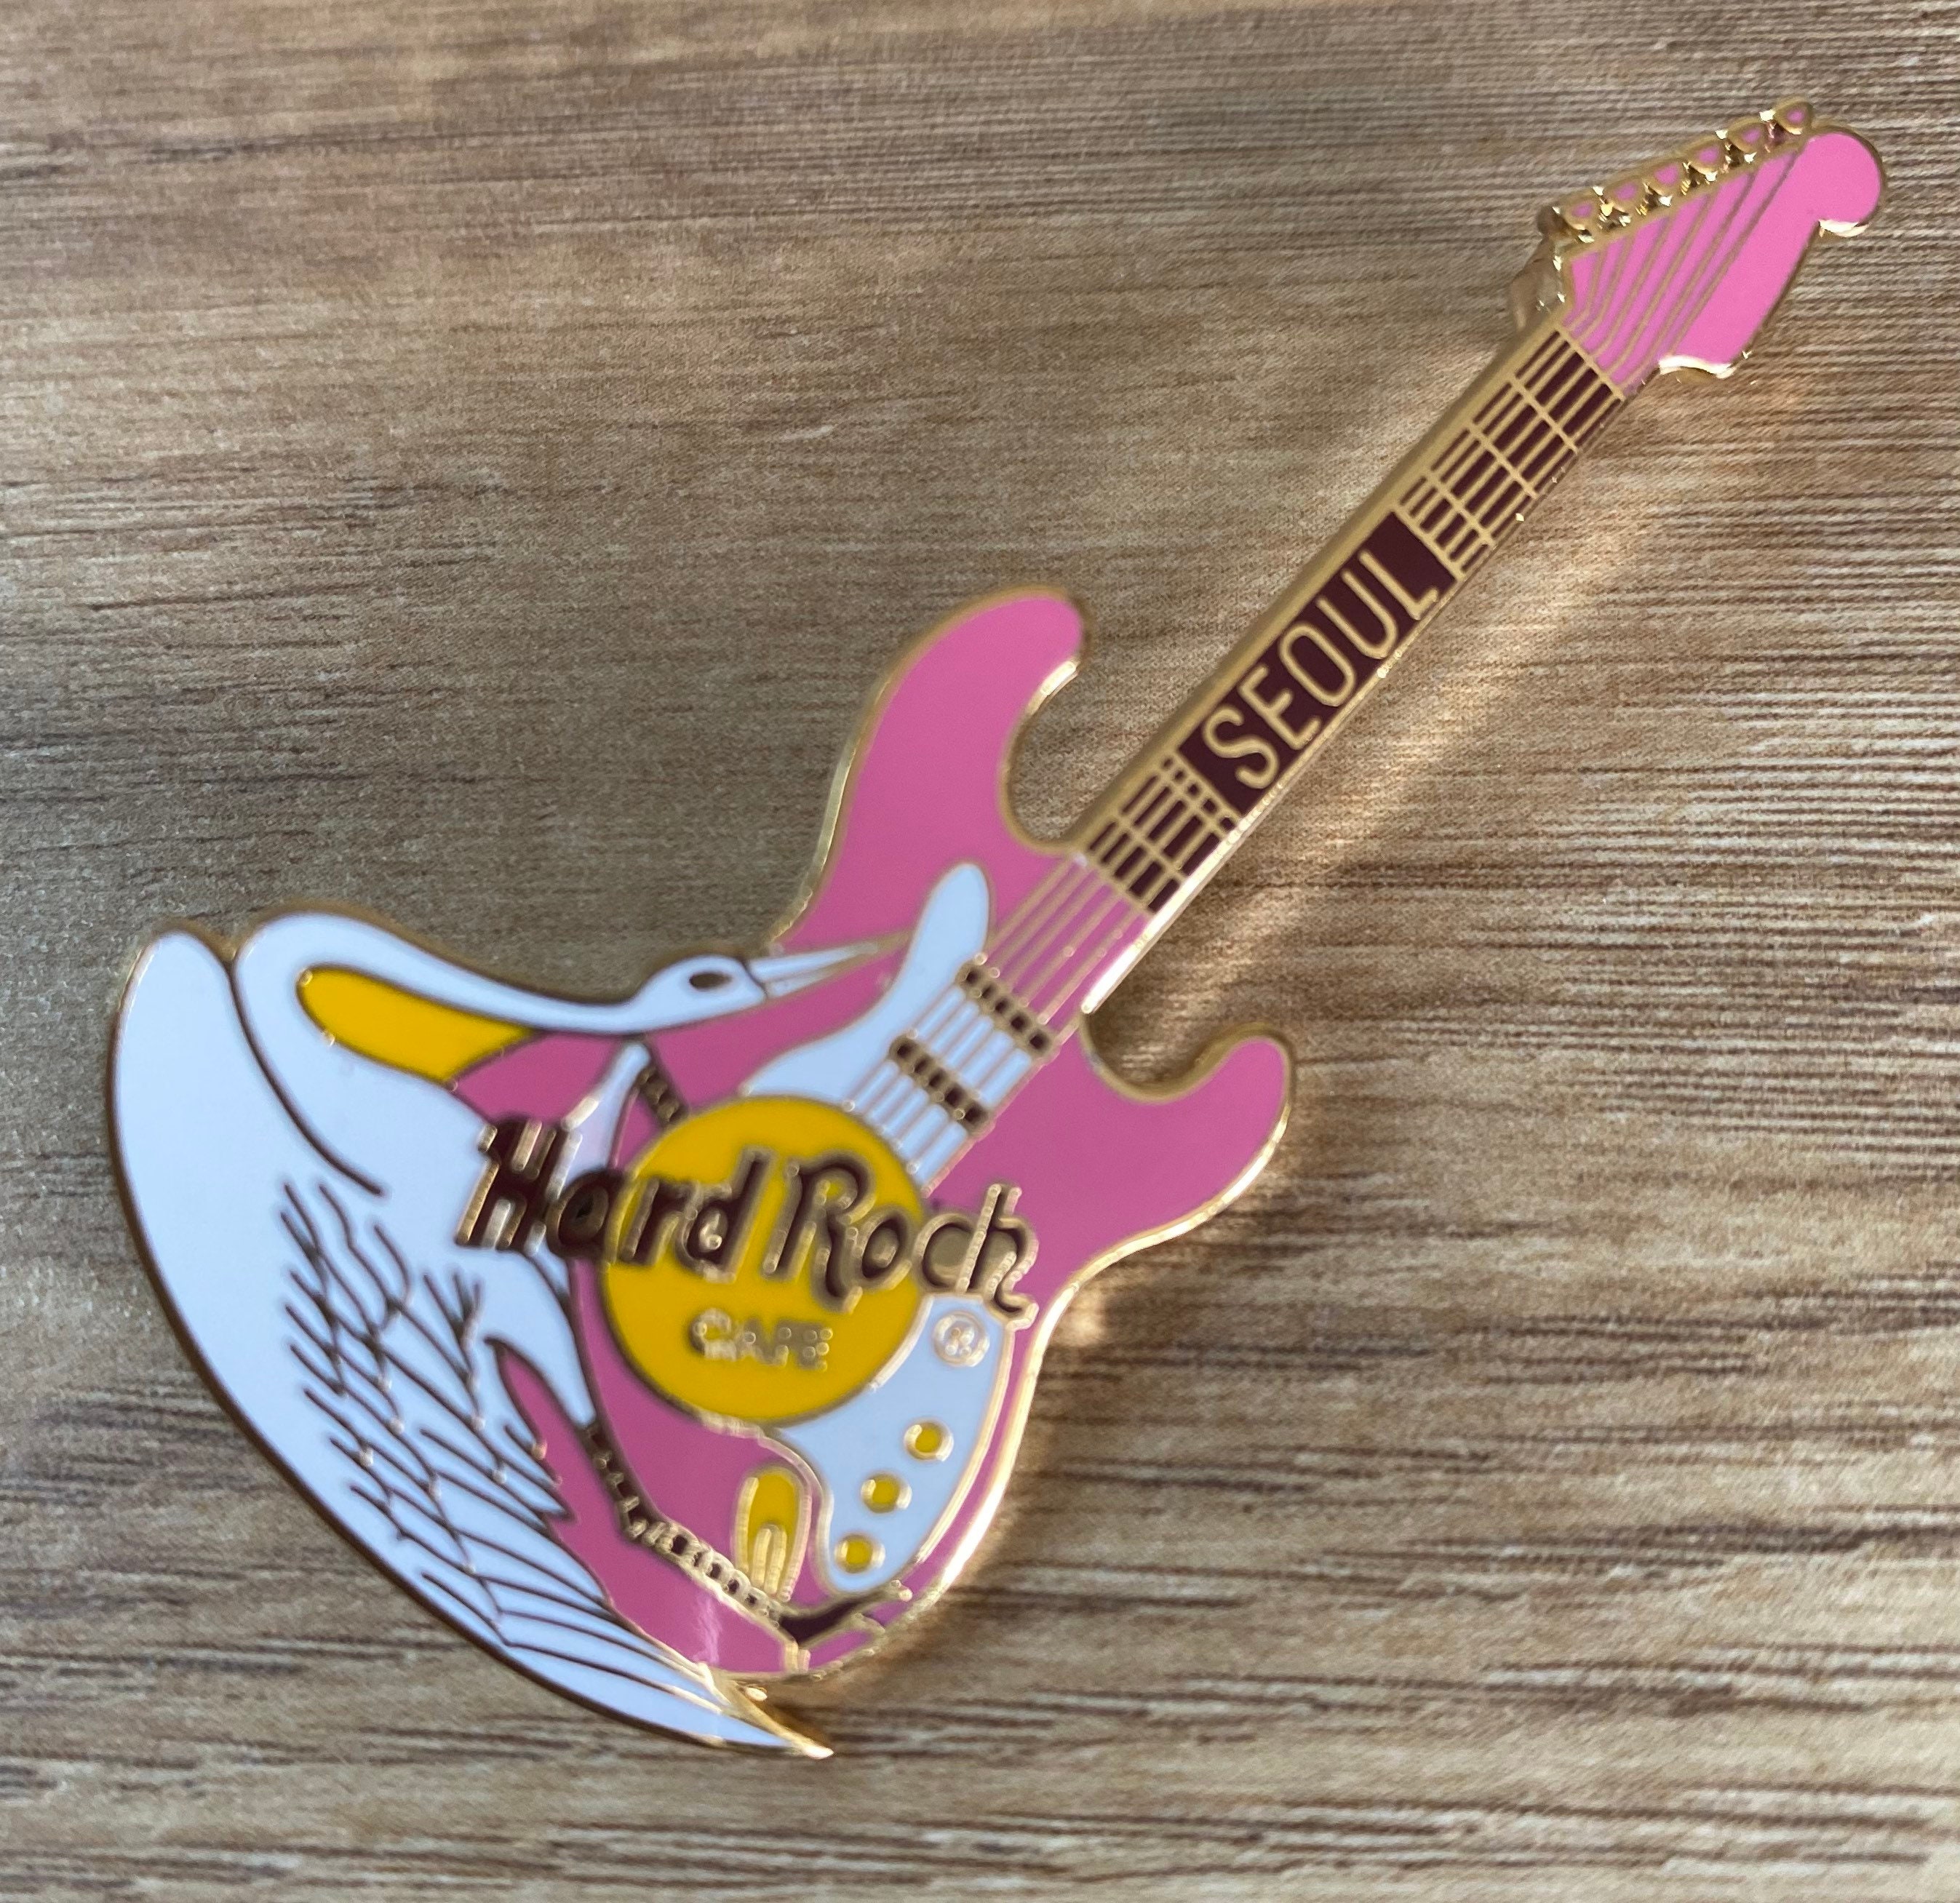 Spin City London - Hard Rock Cafe Pins